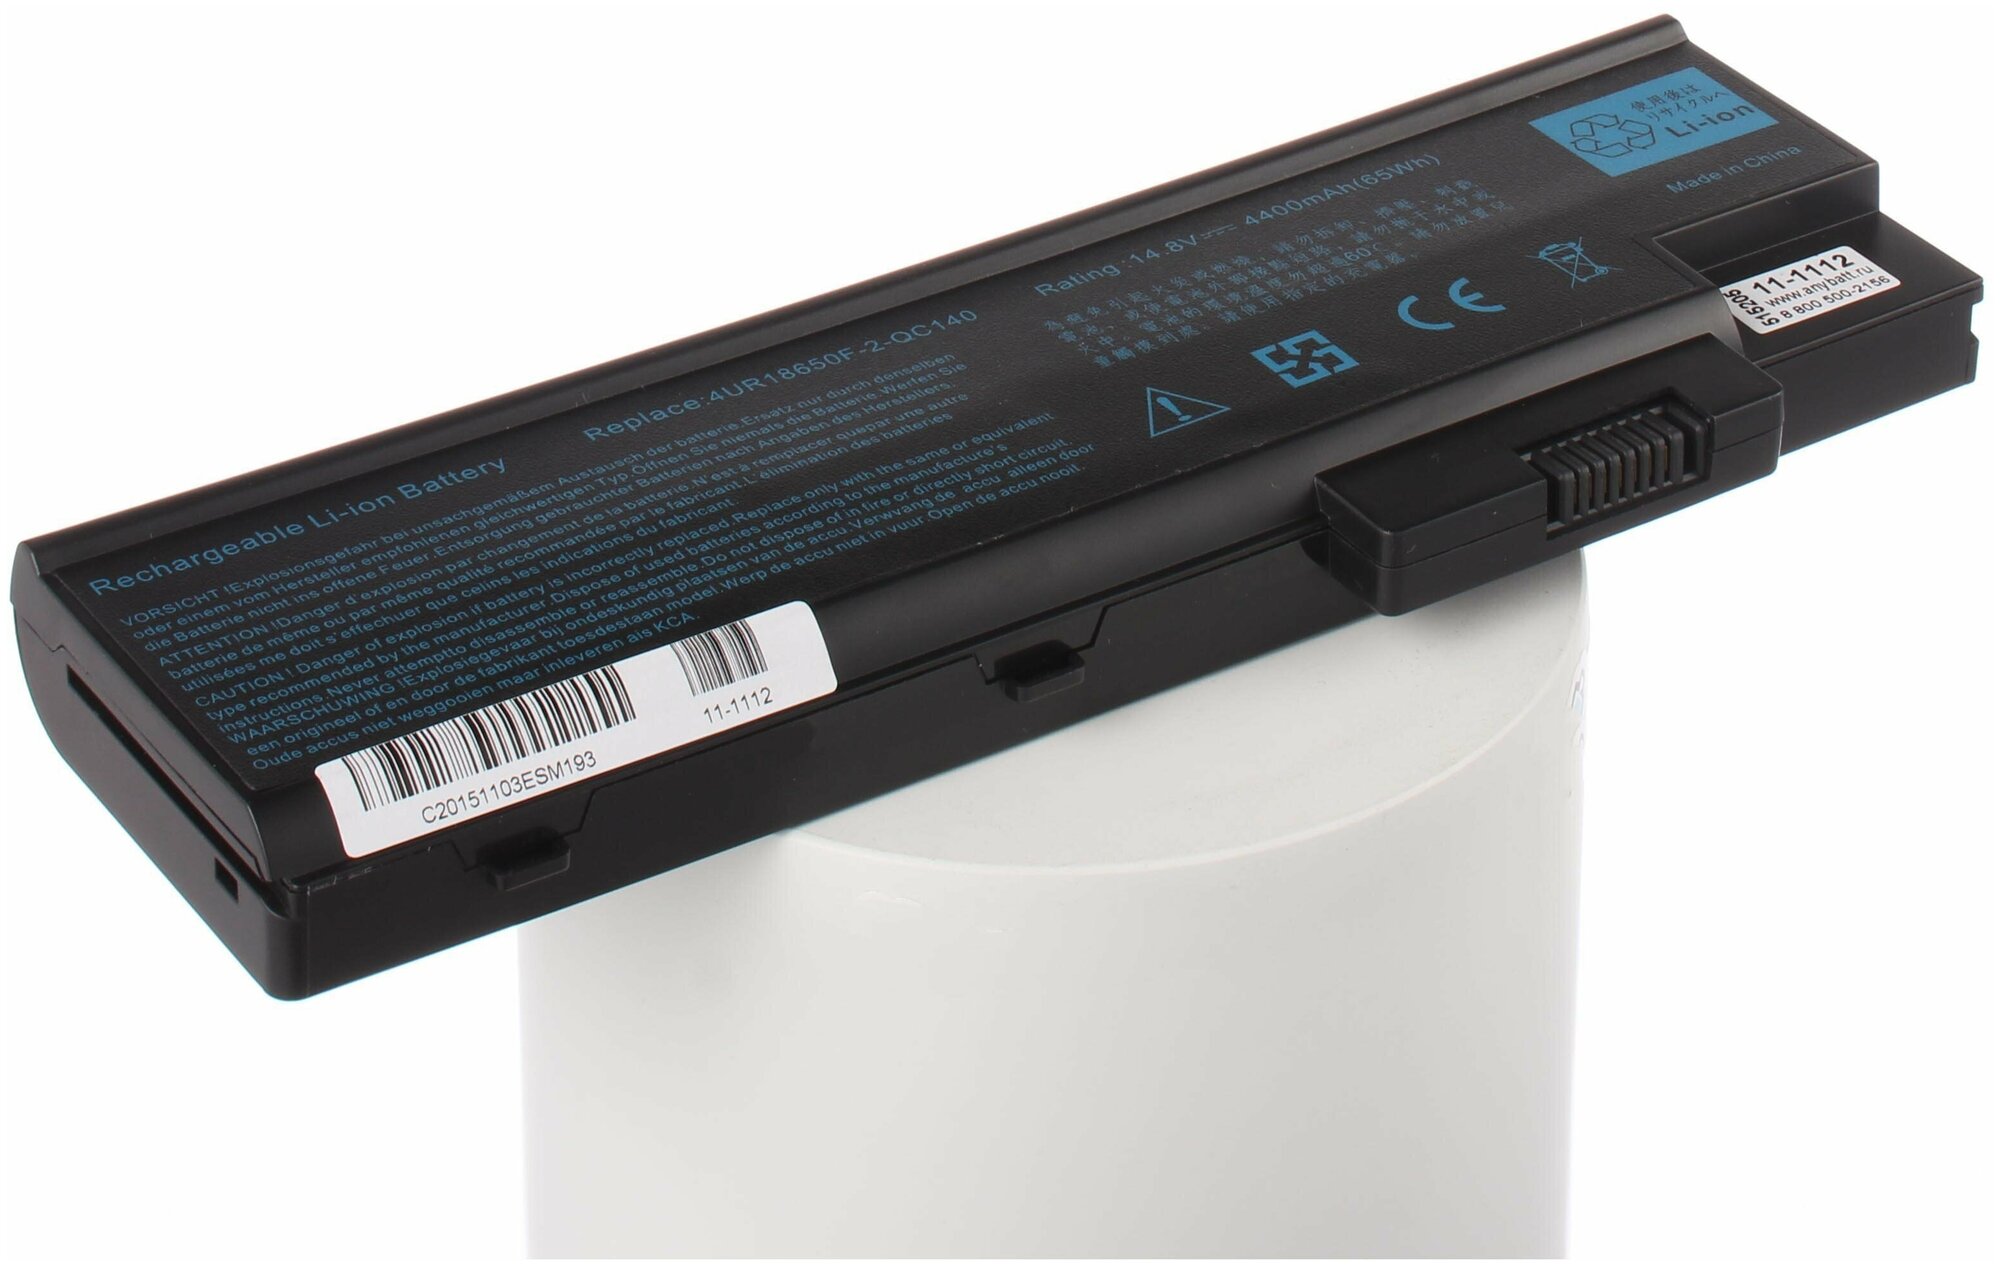 Аккумуляторная батарея Anybatt 11-B1-1112 4400mAh для ноутбуков Acer 4UR18650F-2-QC140 MS2169 916-3020